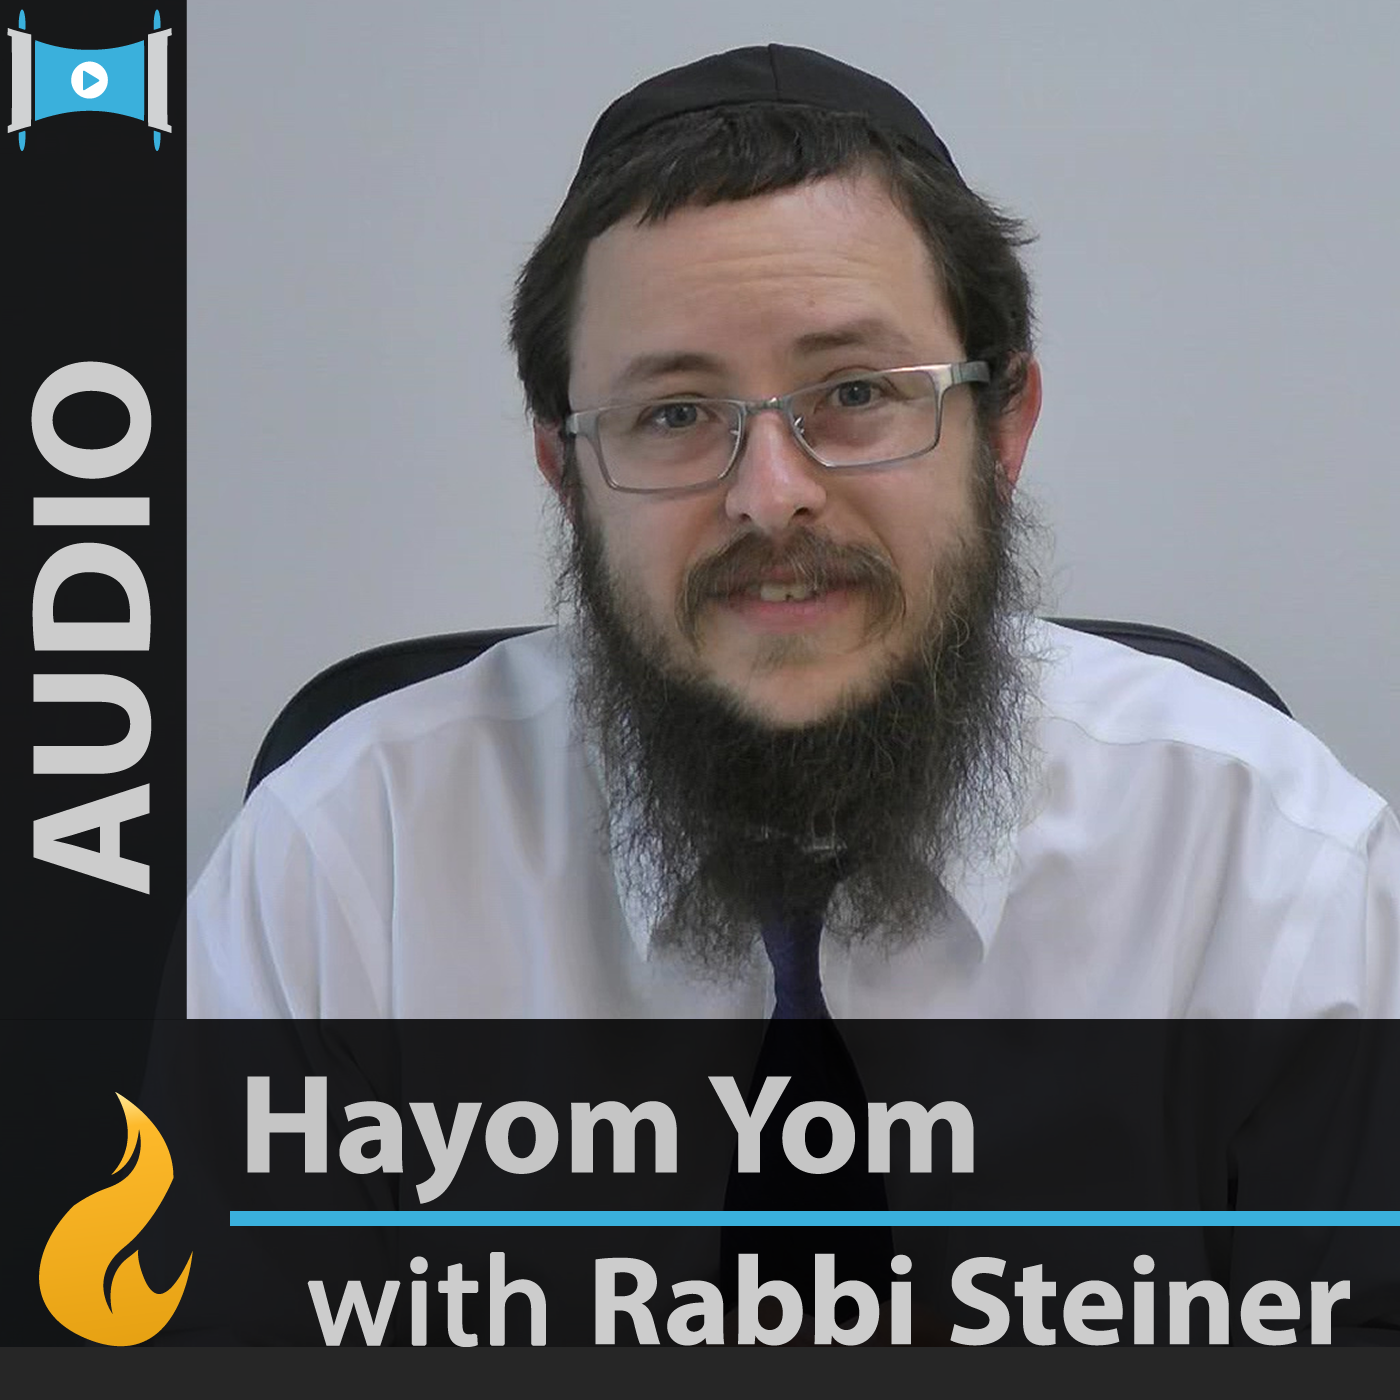 Reflections on "Hayom Yom": Iyar 3